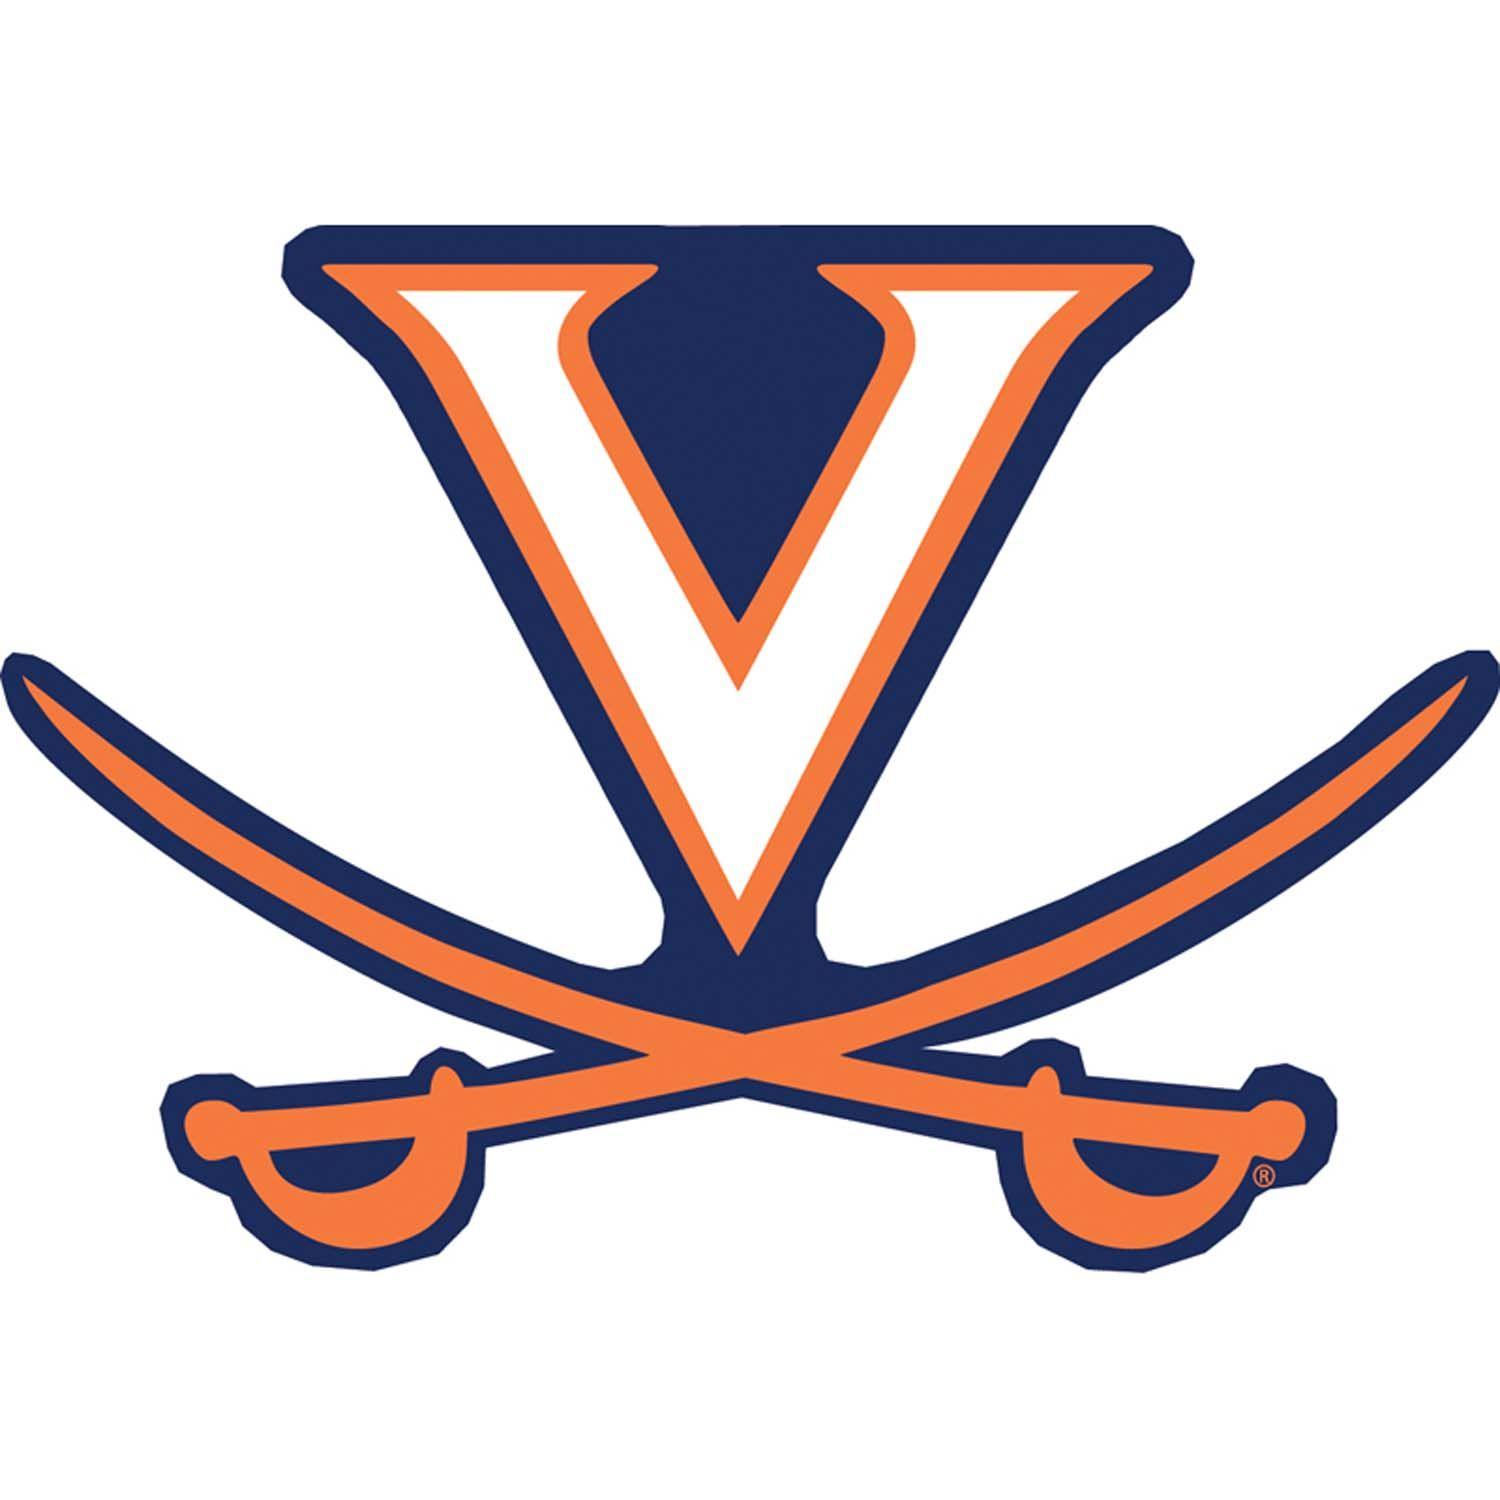 UVA Logo - Uva logo clipart